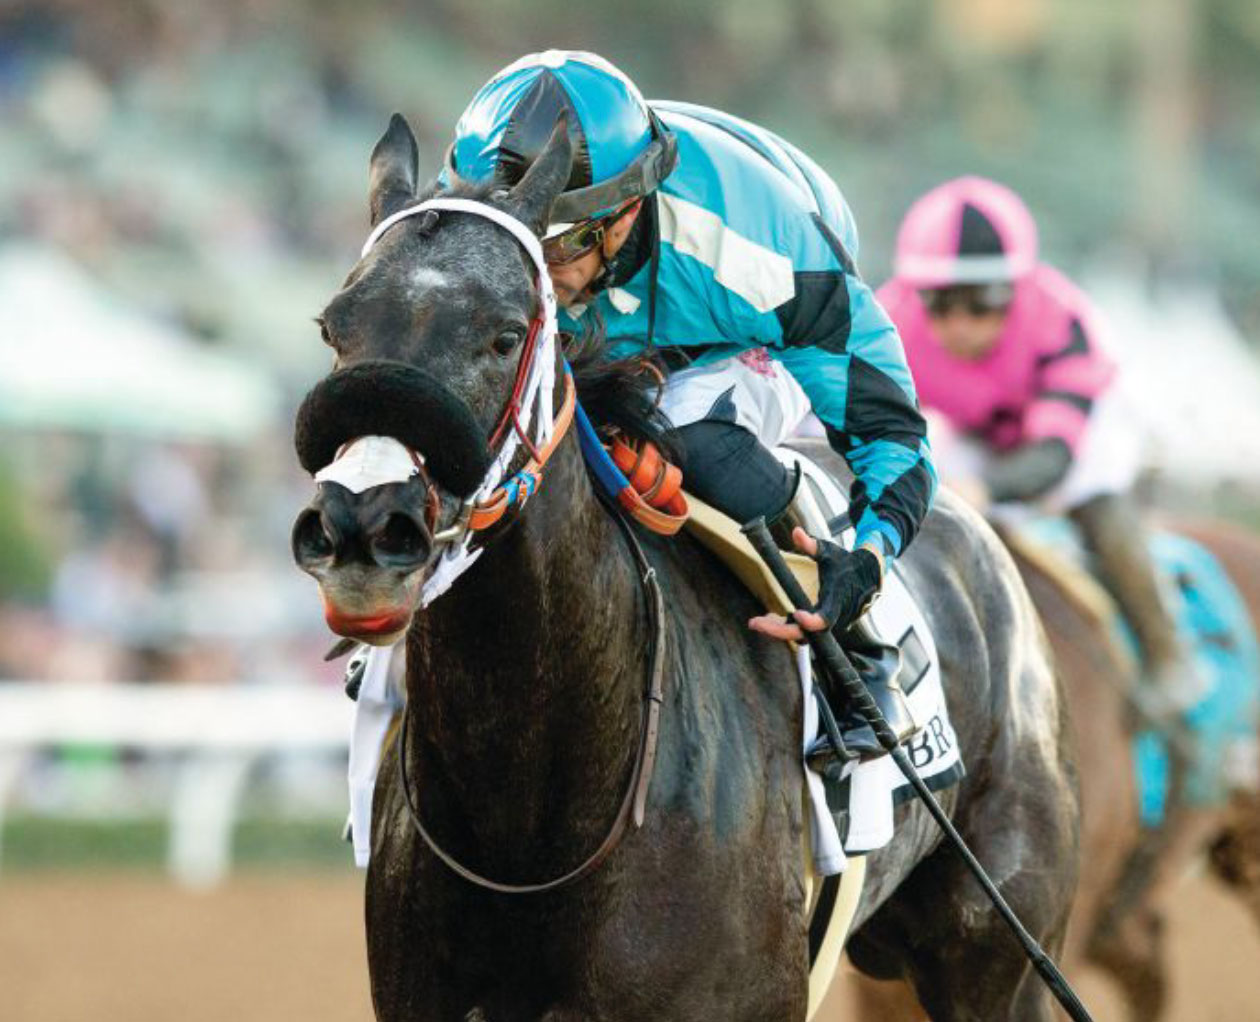 Dark brown horse racing with a jockey in blue silk